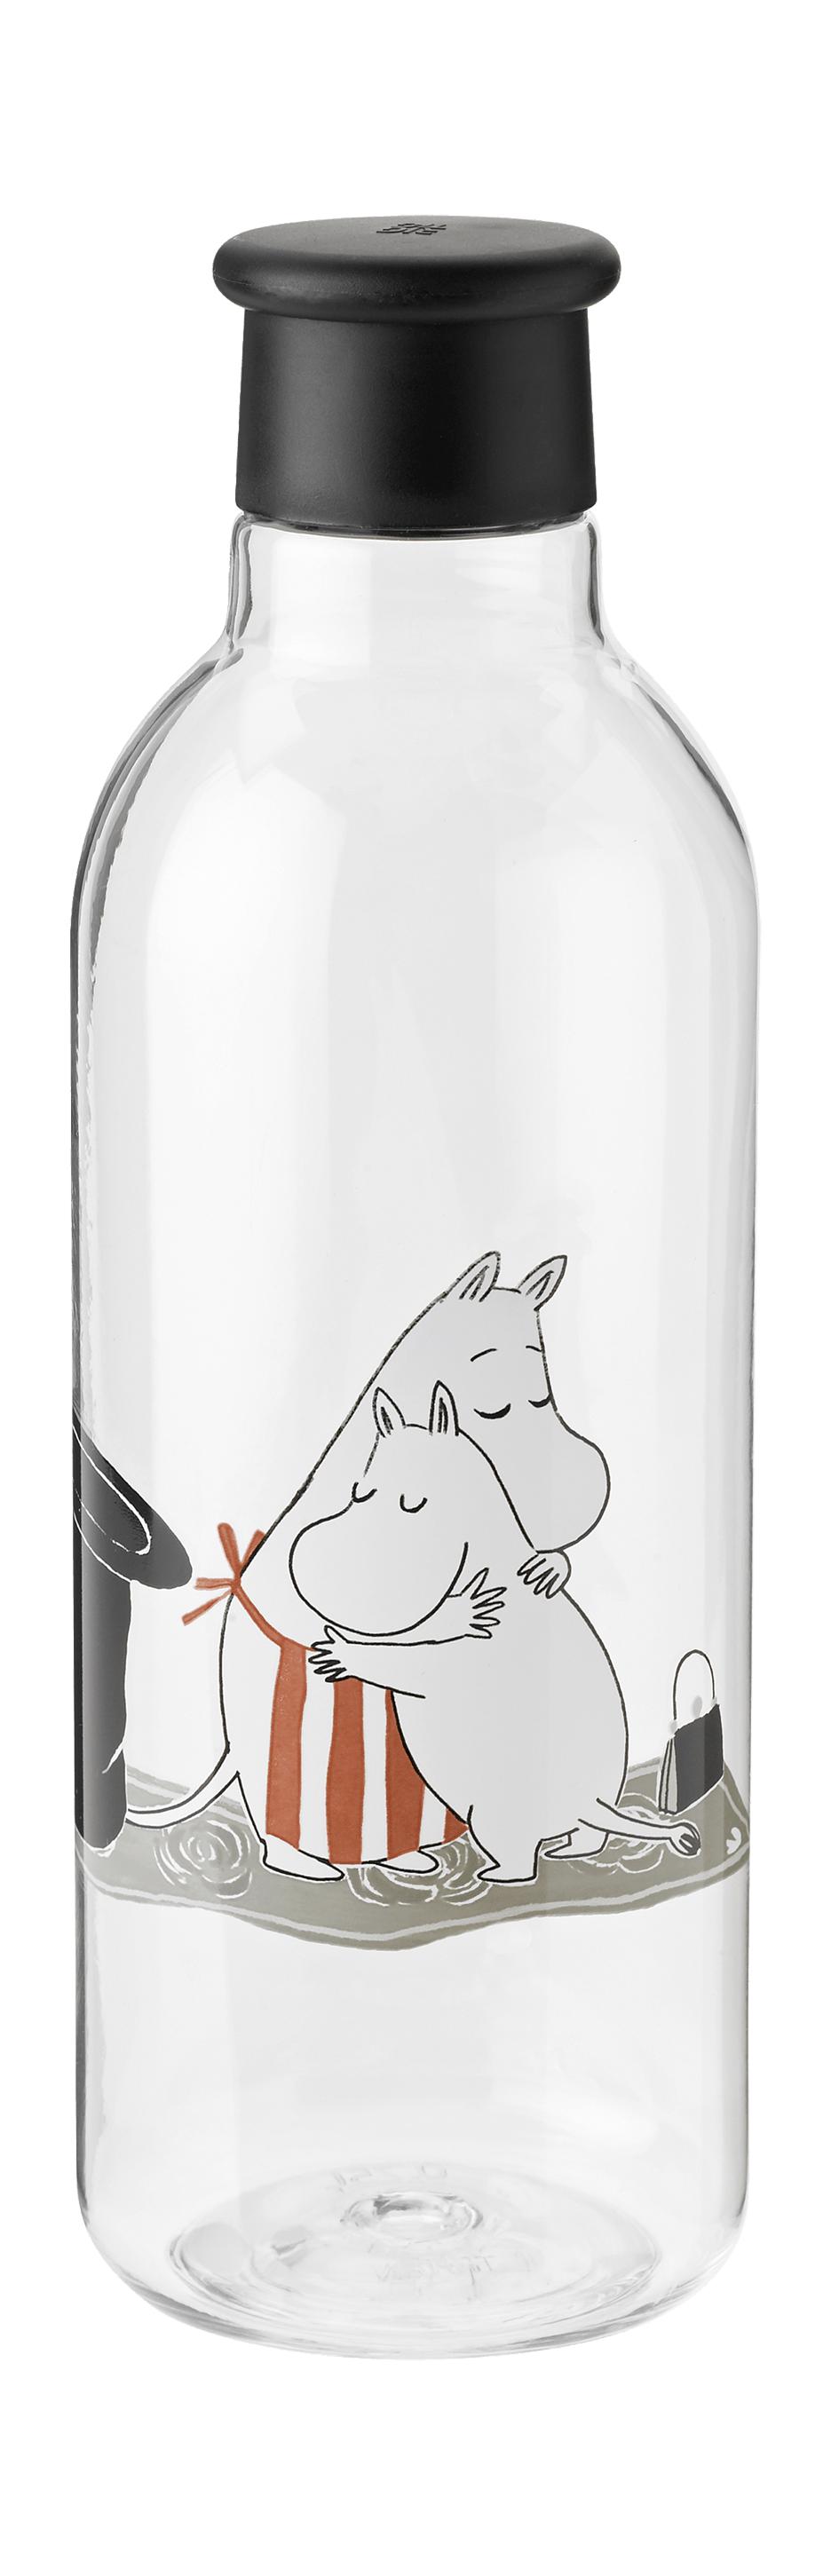 Rig-Tig Rig-Tig X Moomin Drikkeflaske I 0,75 L, Moomin Sort